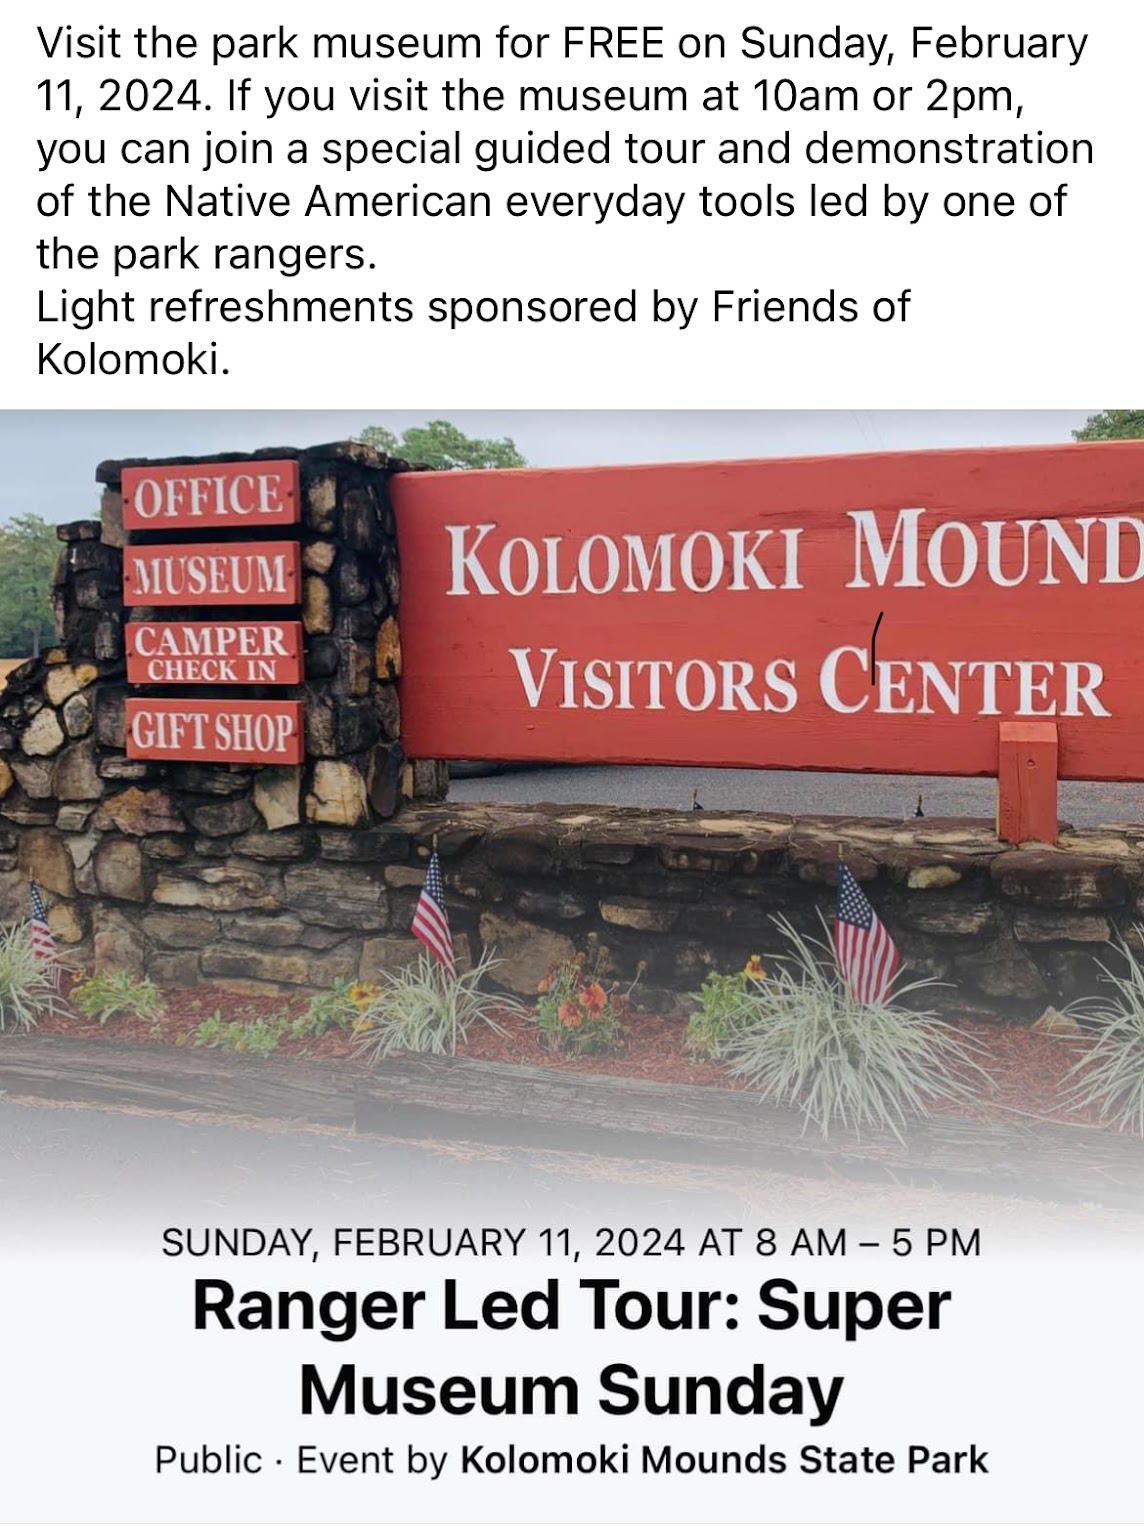 Ranger Led Tour: Super Museum Sunday